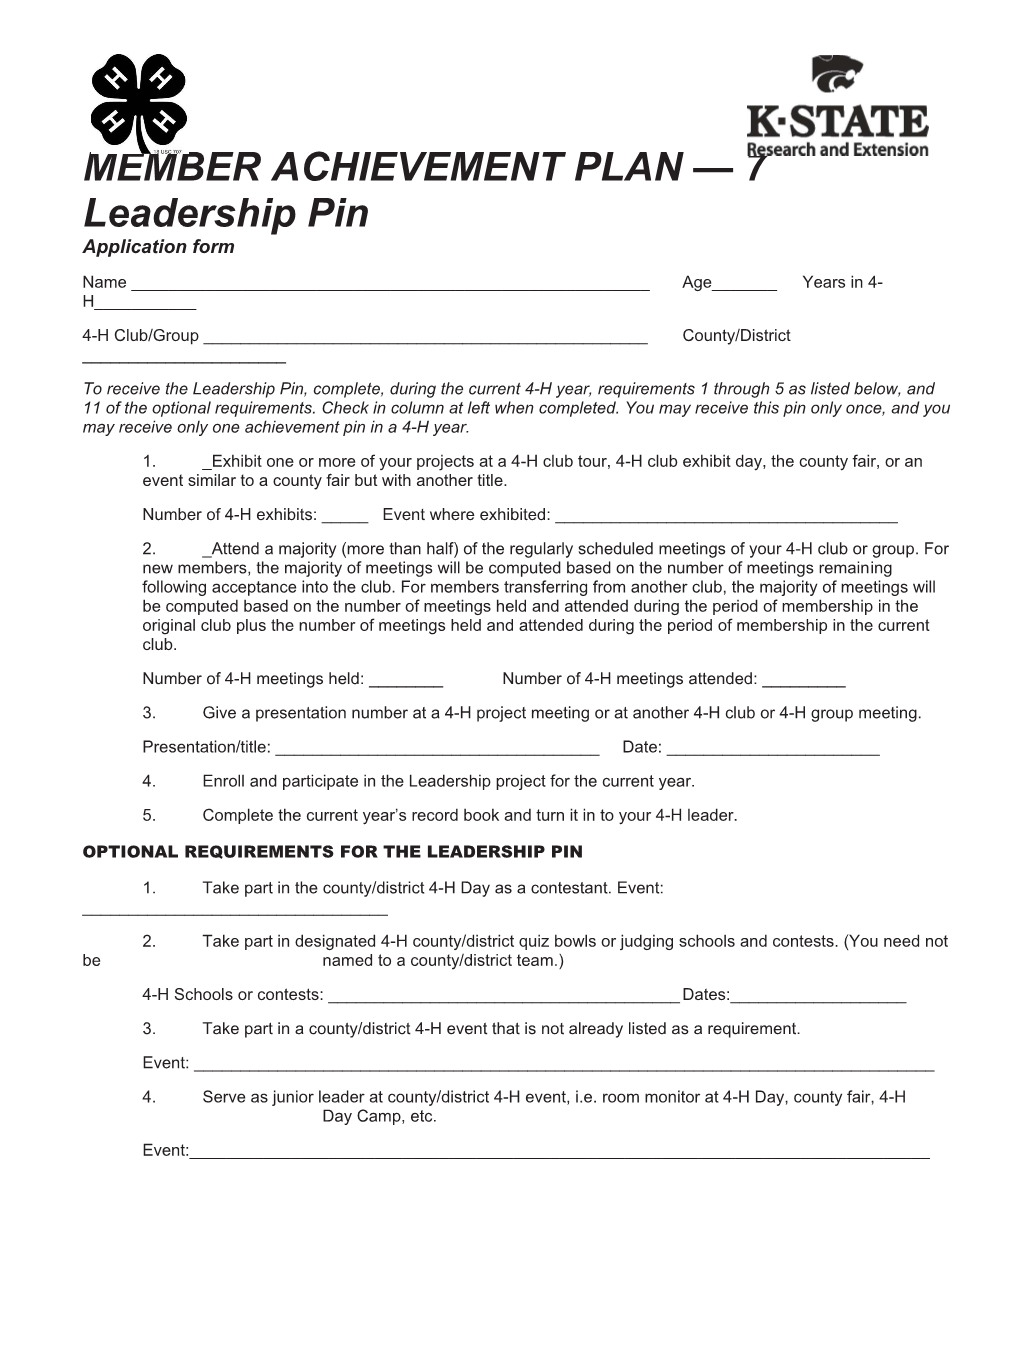 4H504 Membership Achievement Plan 7, Leadership Pin